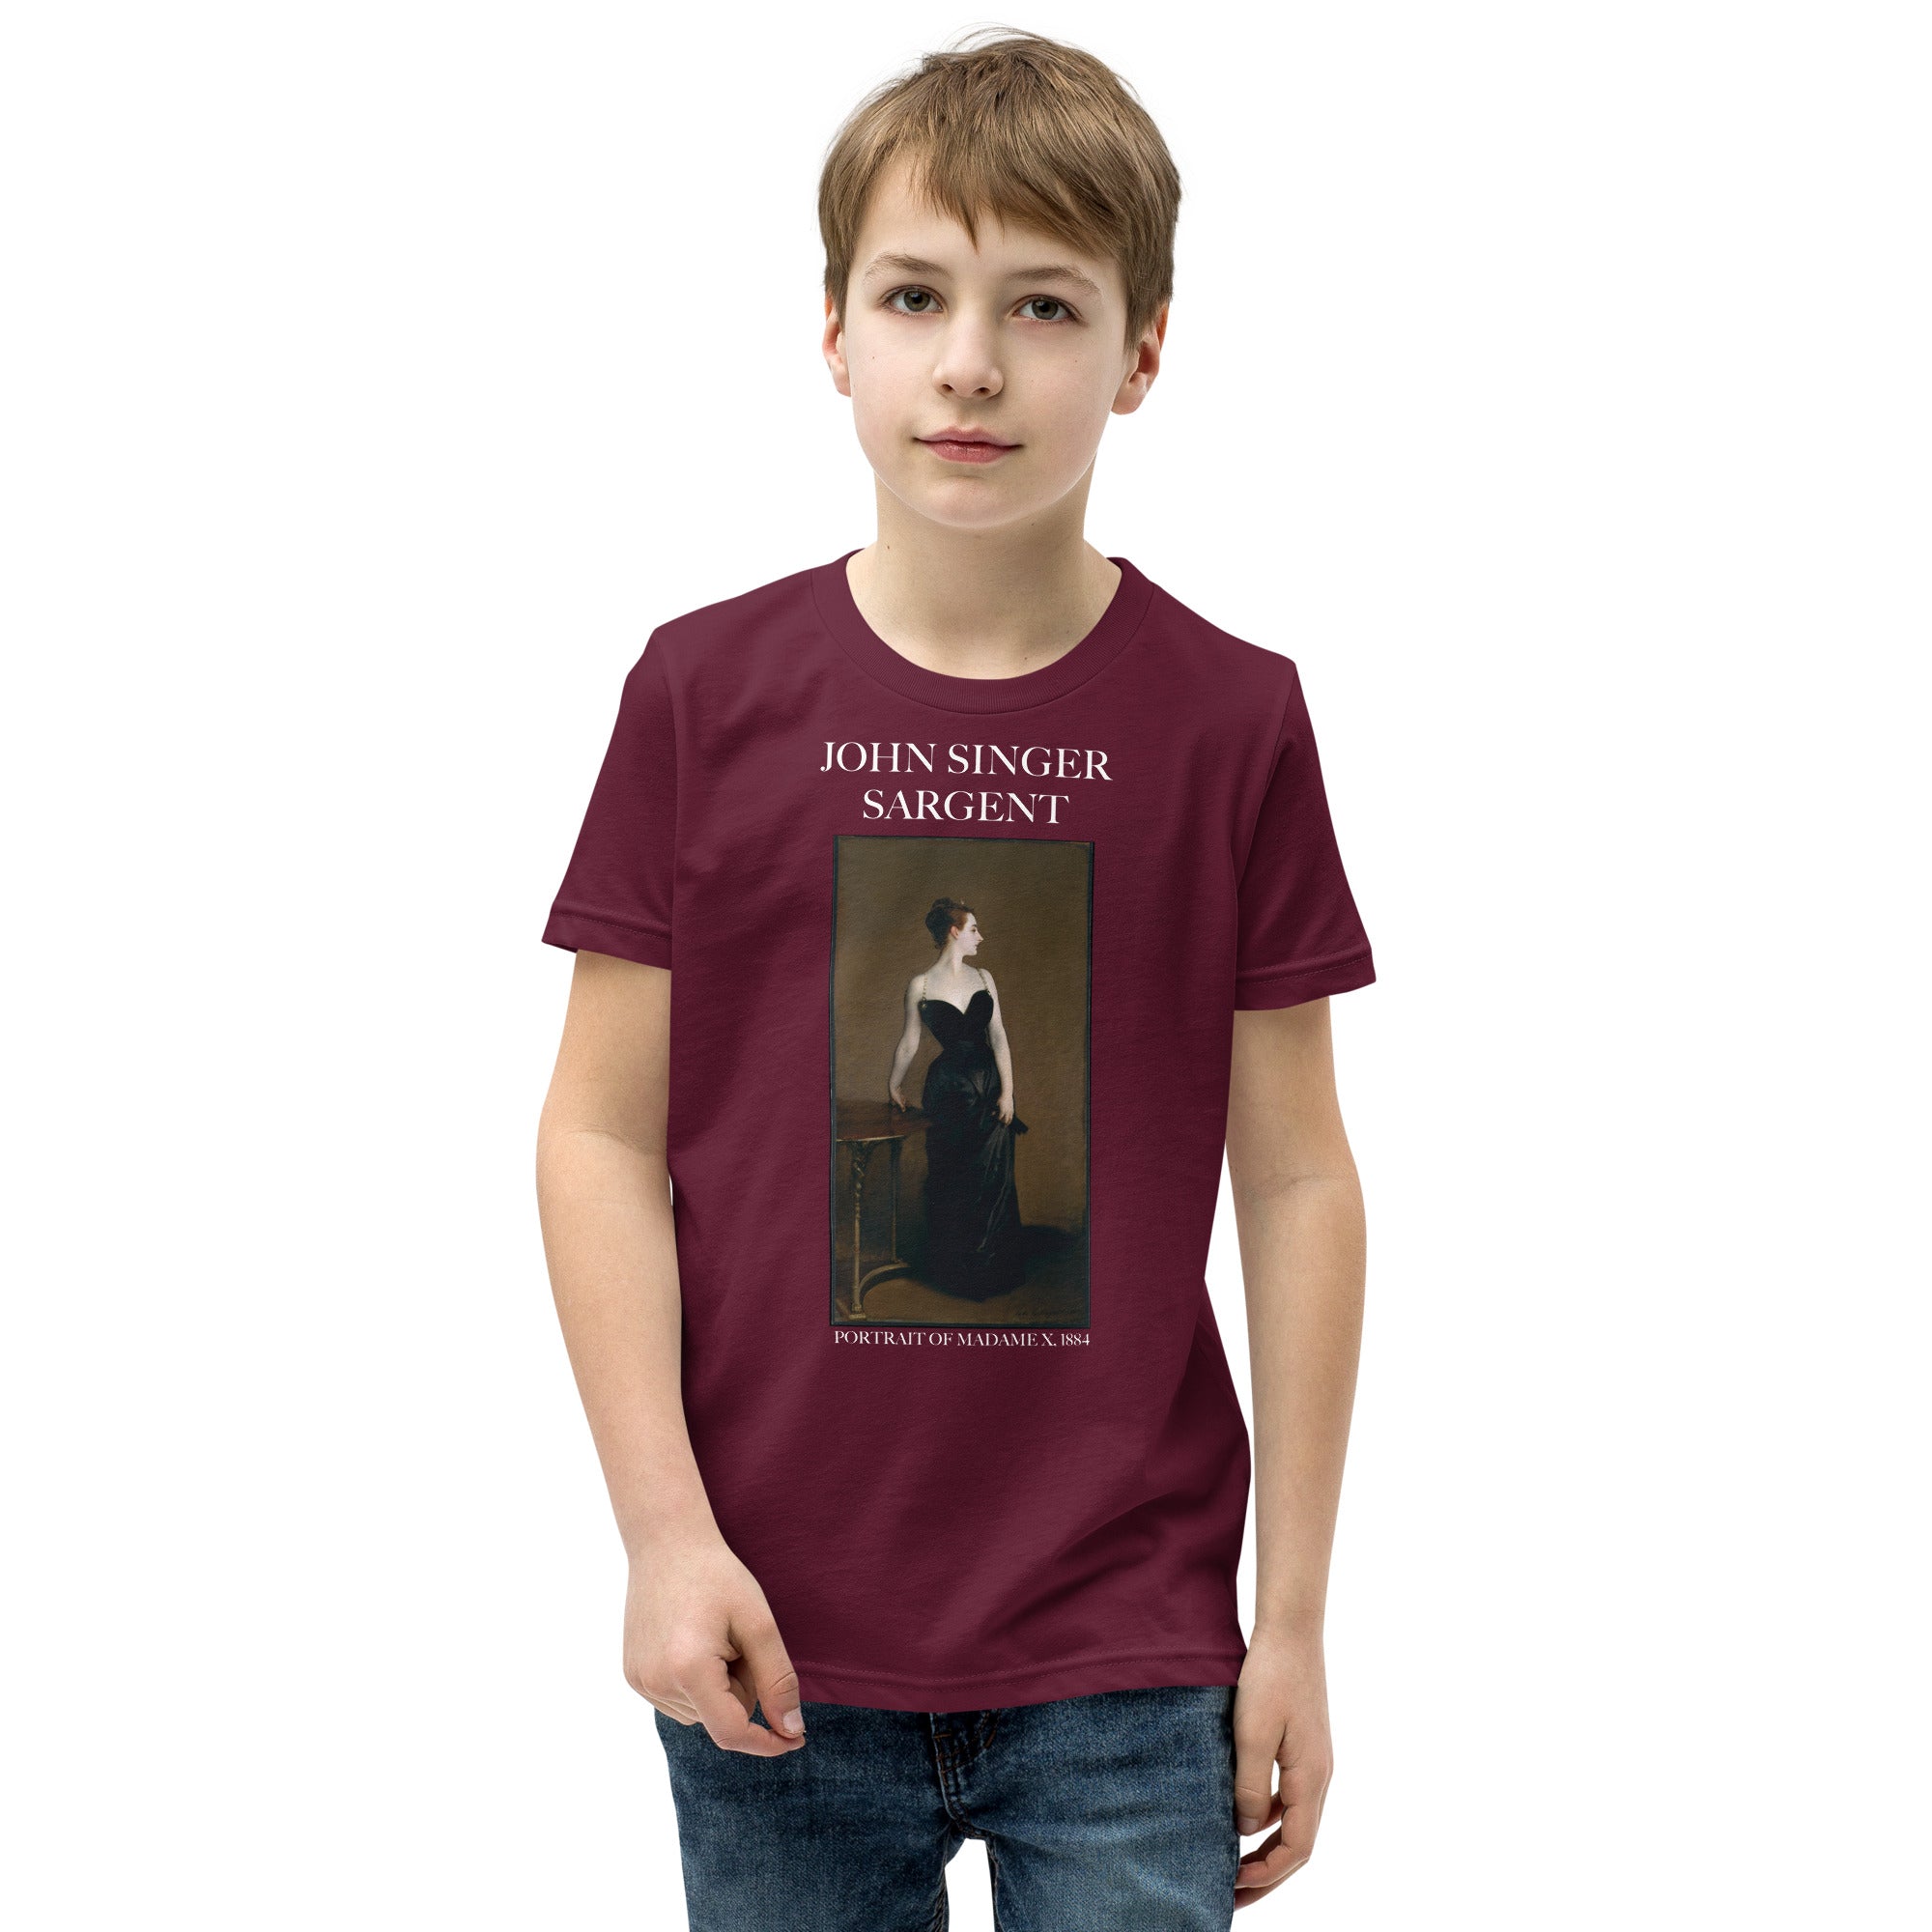 John Singer Sargent 'Portrait of Madame X' Famous Painting Short Sleeve T-Shirt | Premium Youth Art Tee